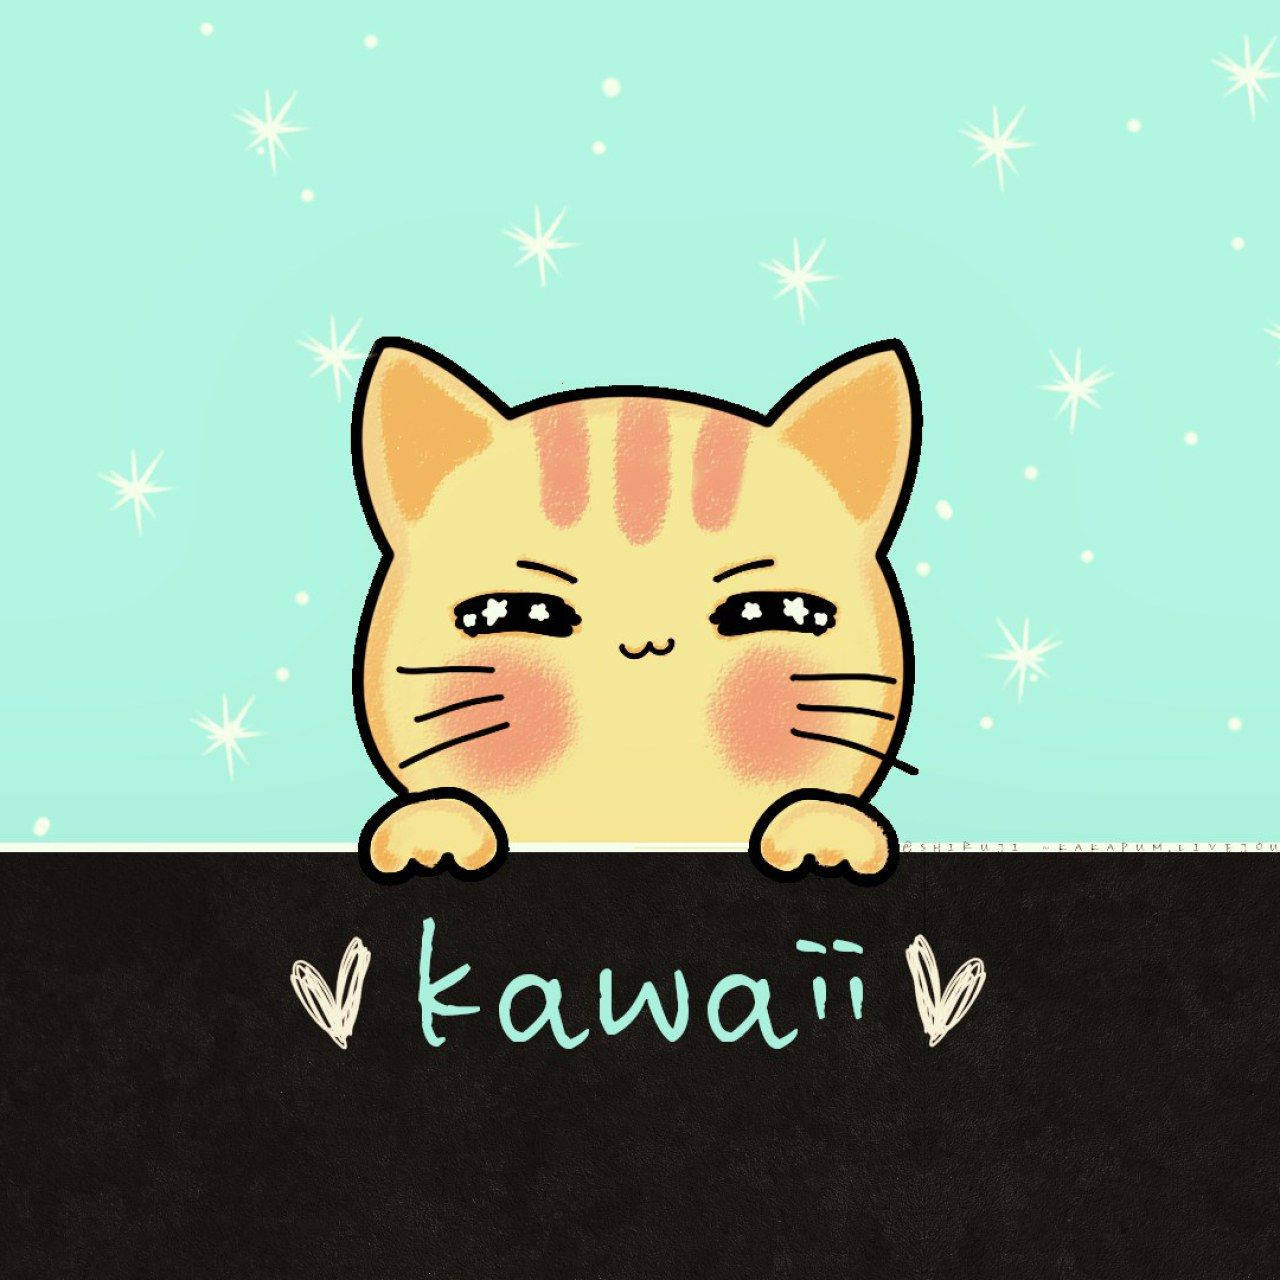 Cute Kawaii Cat With Text Wallpaper